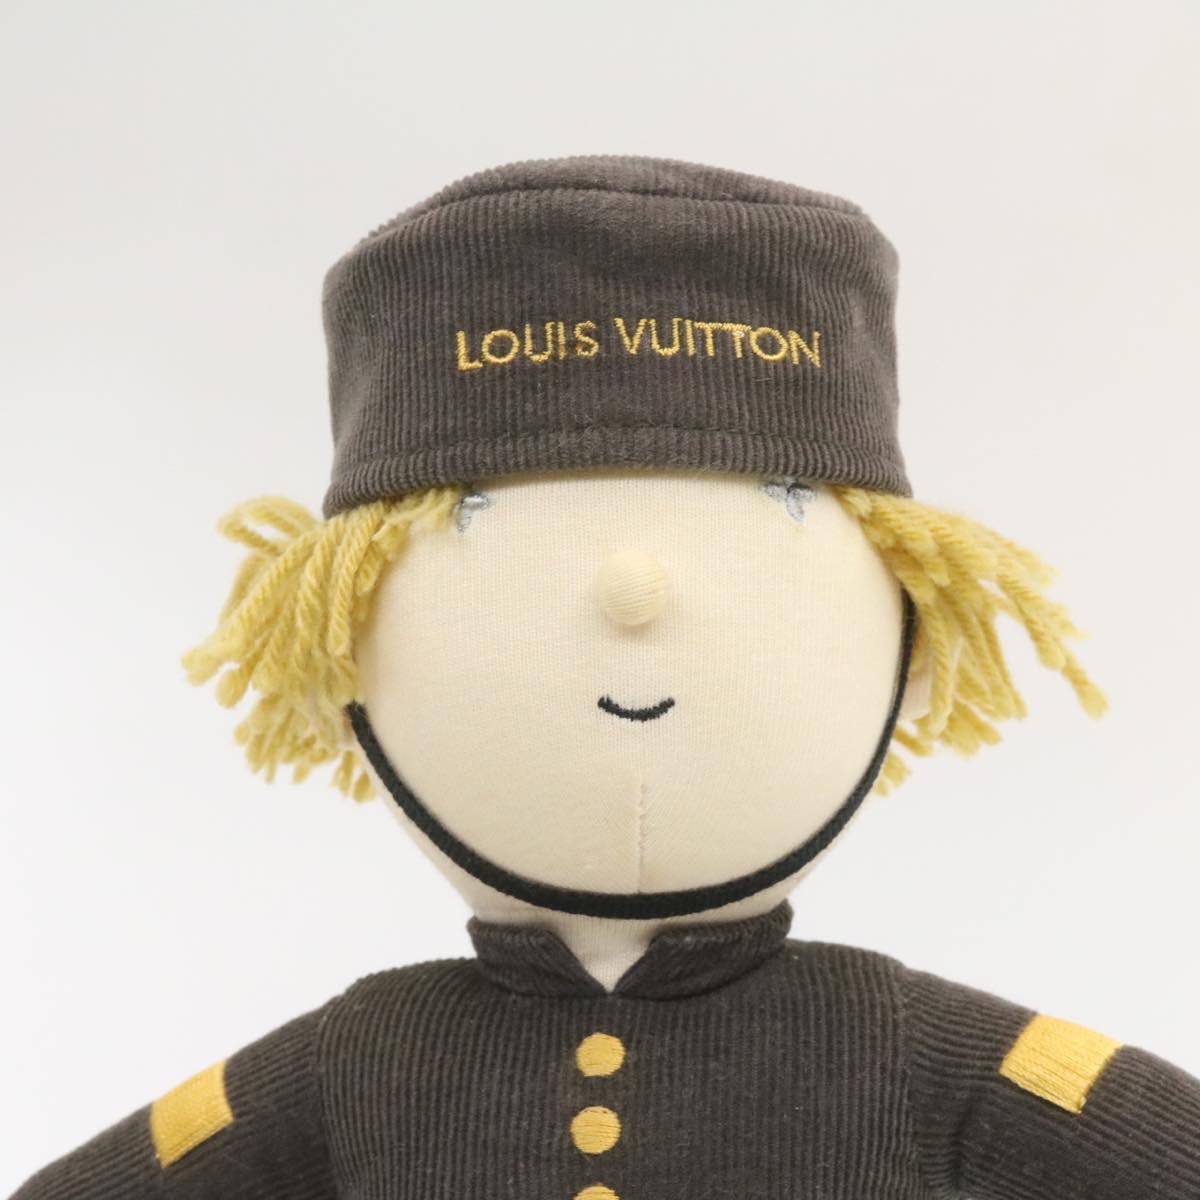 Louis Vuitton Bellboy Groom Doll